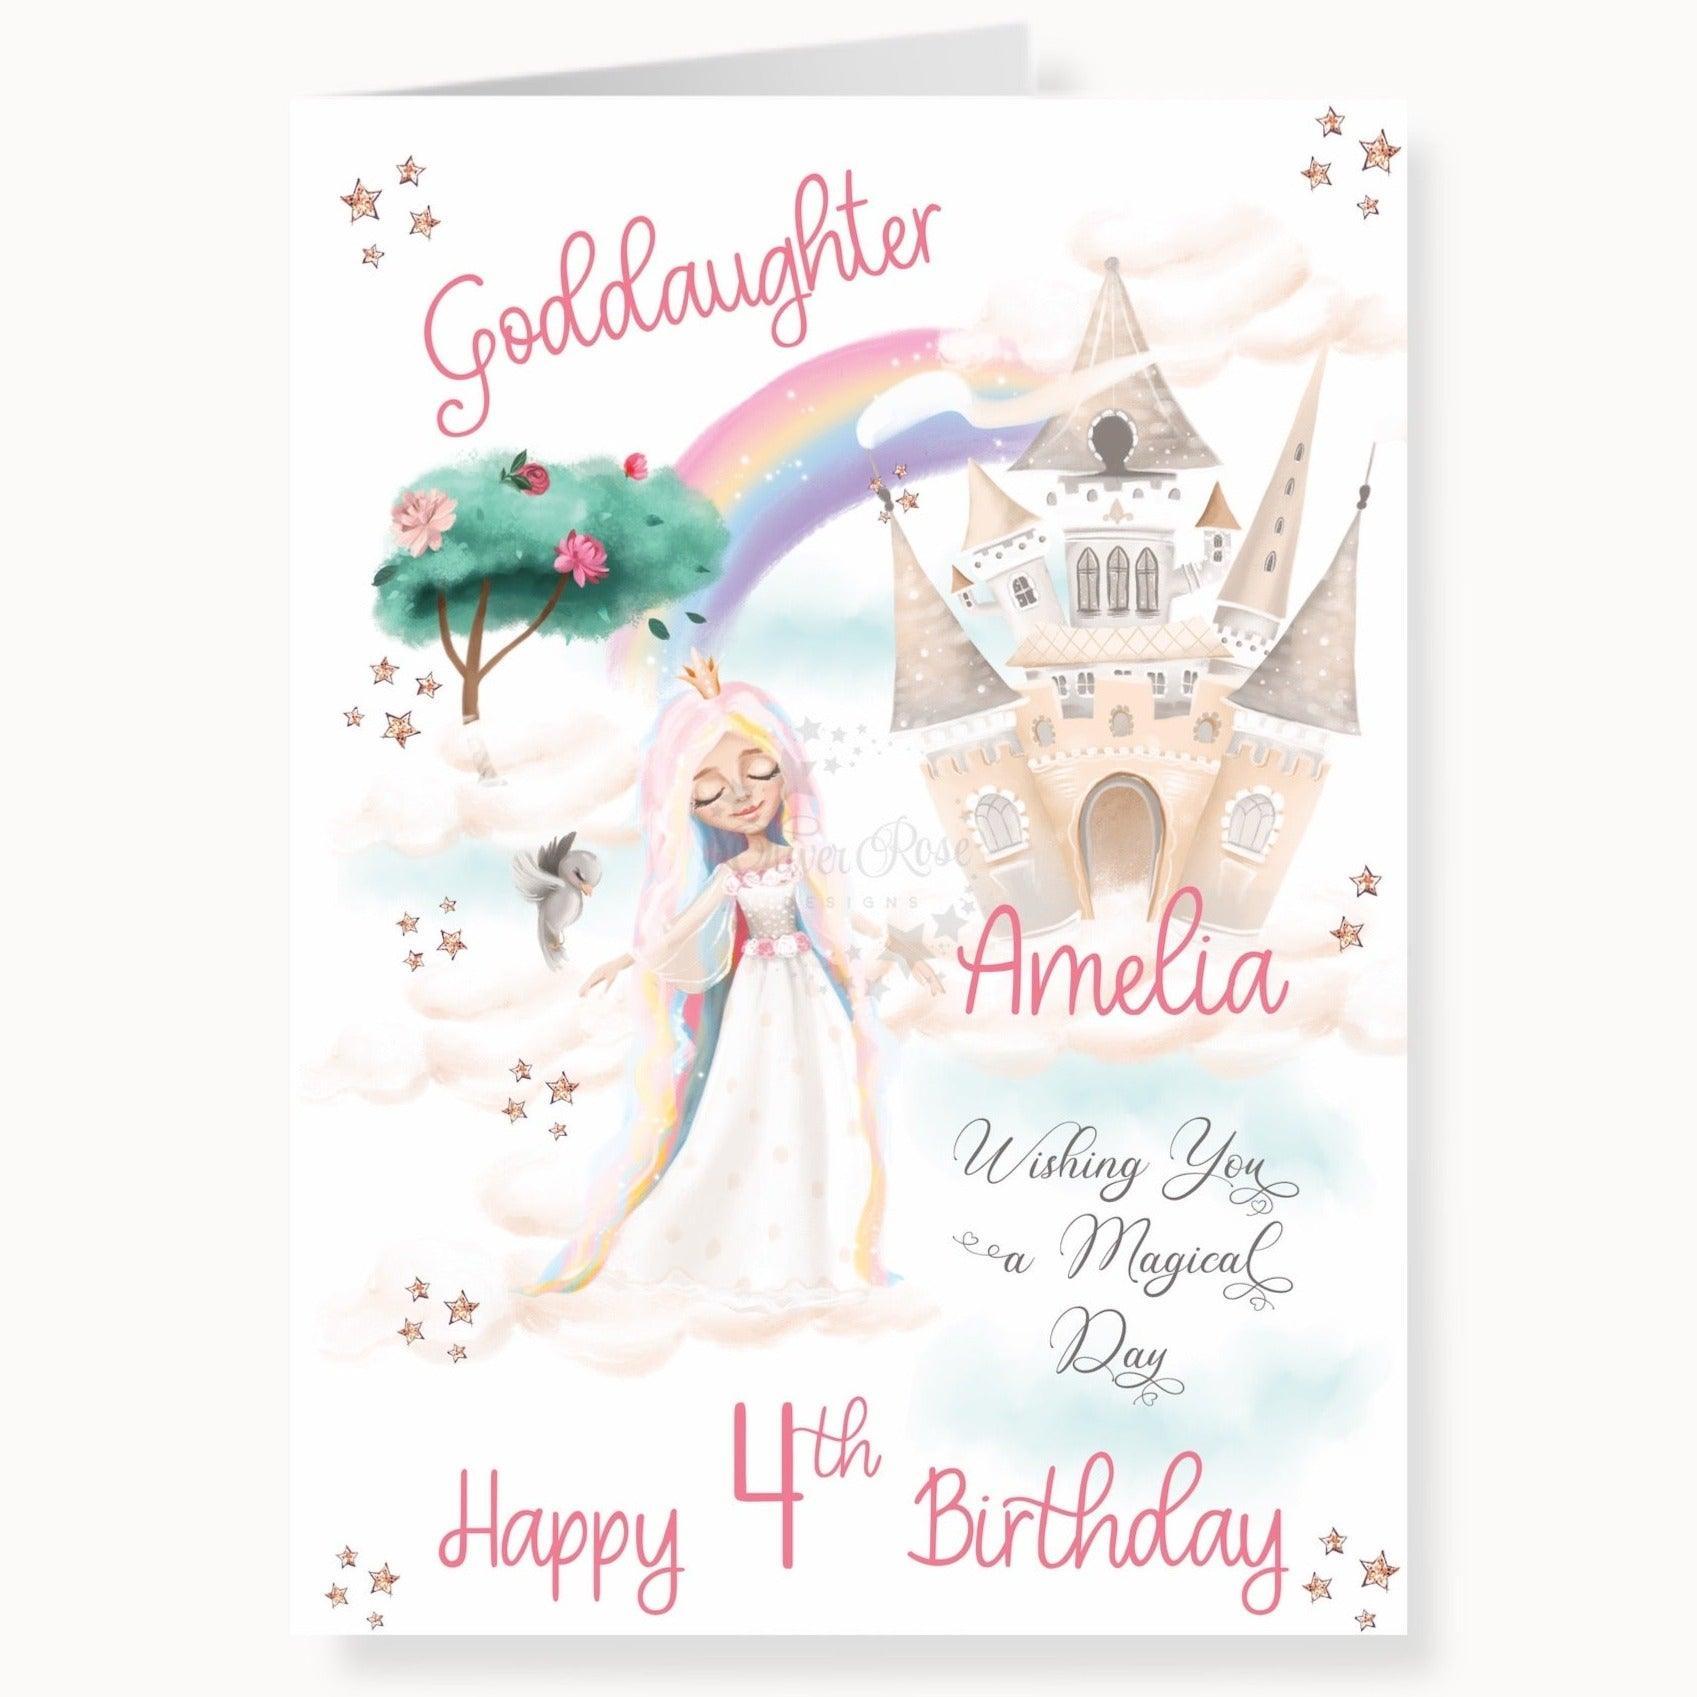 Princess Goddaughter 4th Birthday Card, Personalised Birthday Card, Dreamy Rainbow Princess Castle Birthday Card, any age, any relationship